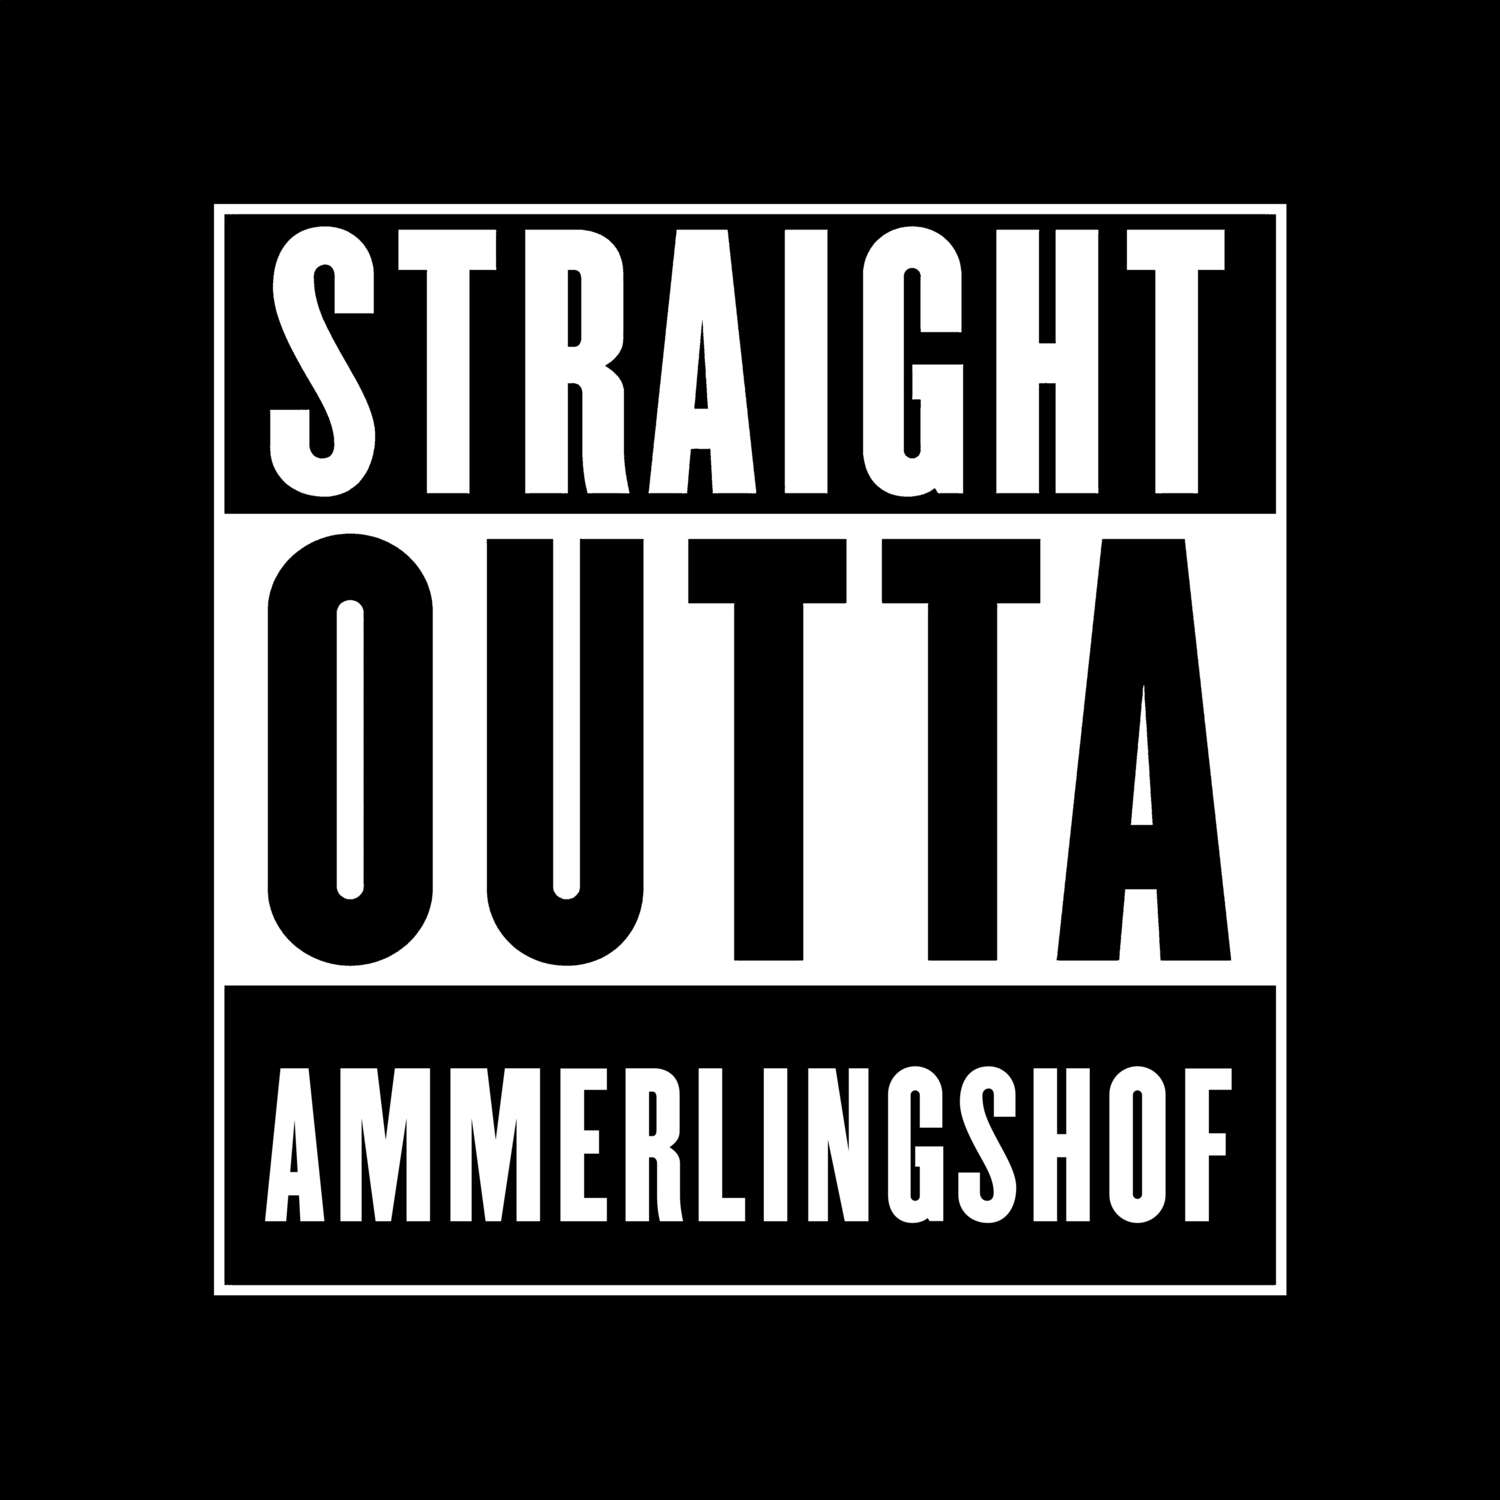 Ammerlingshof T-Shirt »Straight Outta«